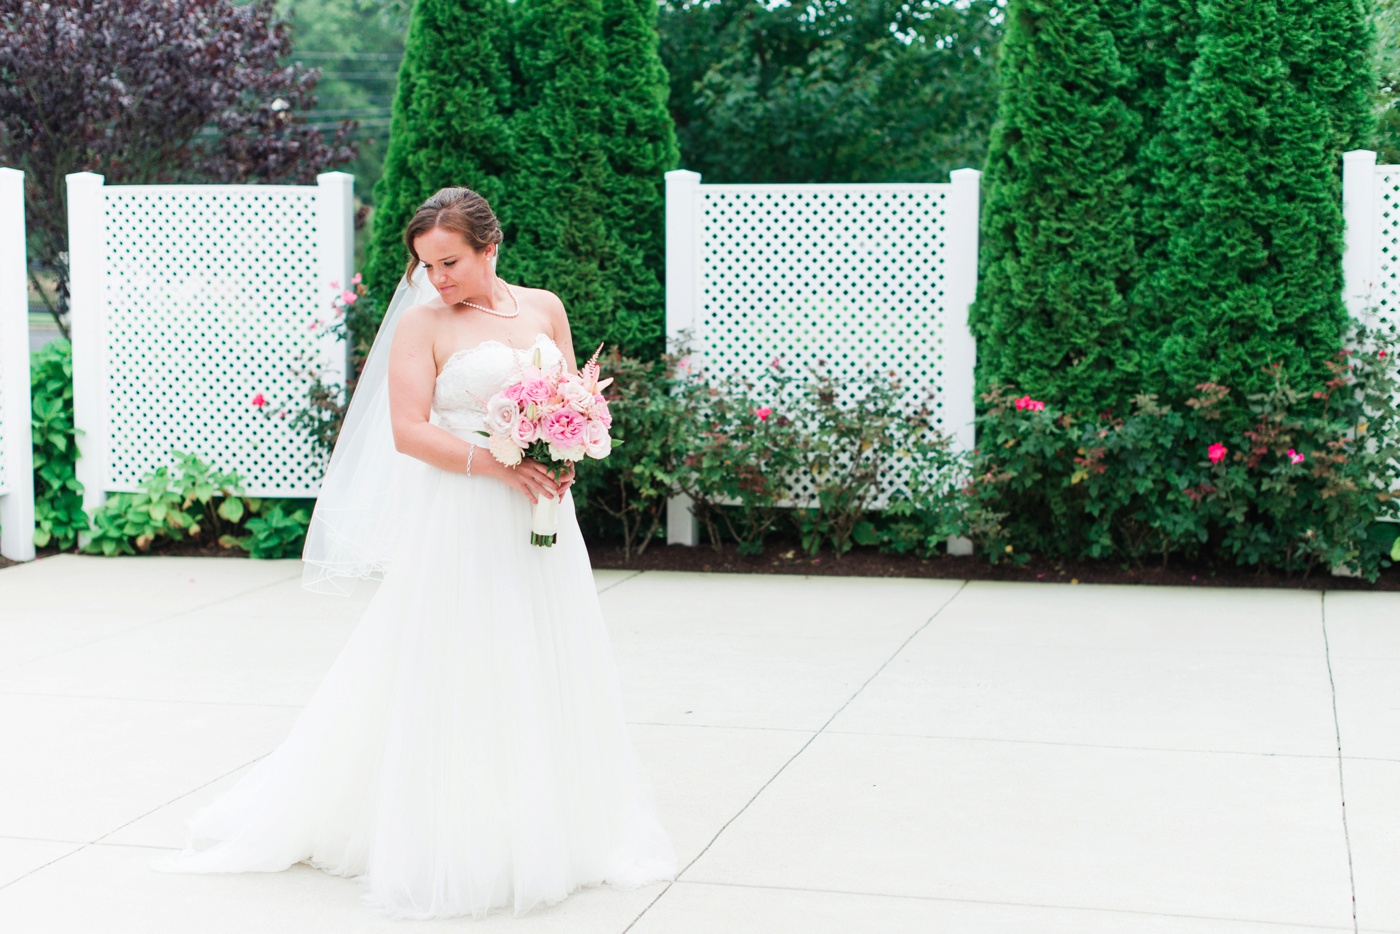 Amanda + Ruben - The Carriage House Wedding - Galloway New Jersey Photographer - Alison Dunn Photography-54